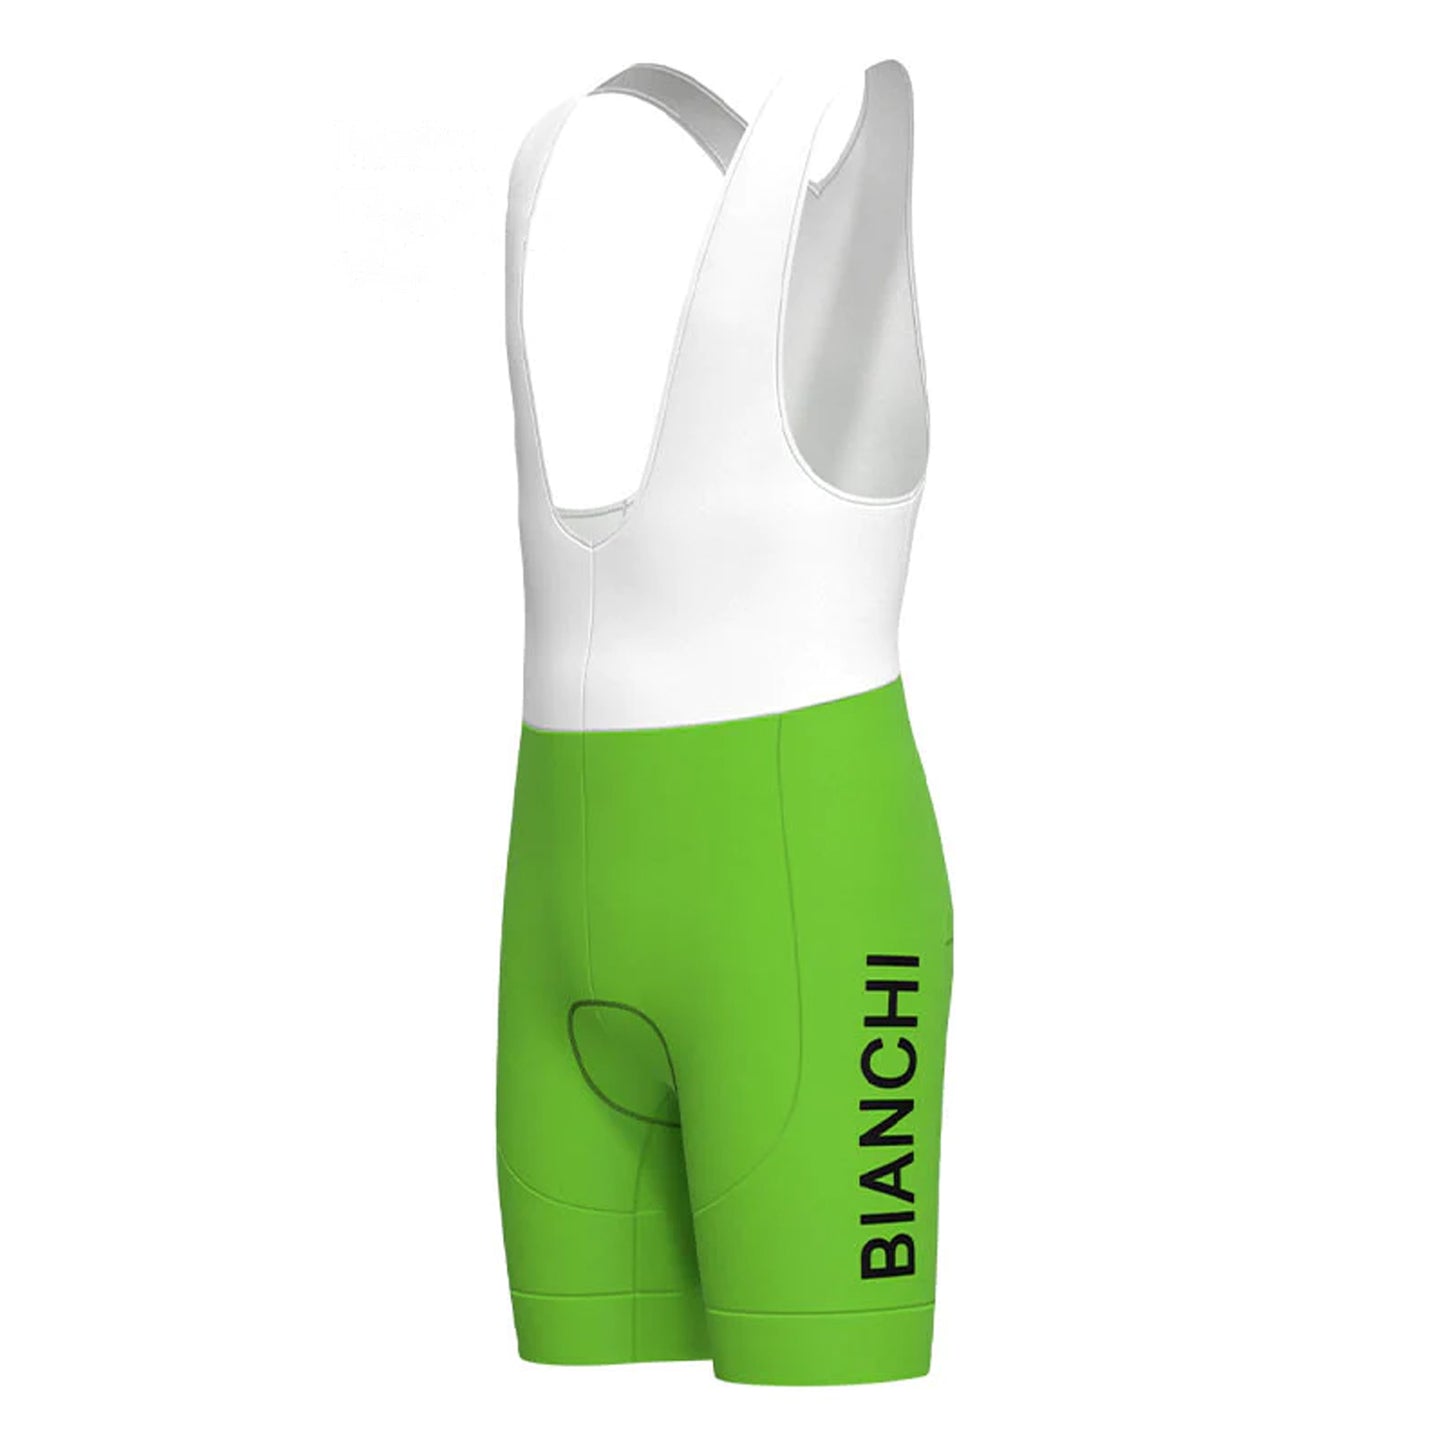 Bianchi Green Vintage Cycling Bib Shorts